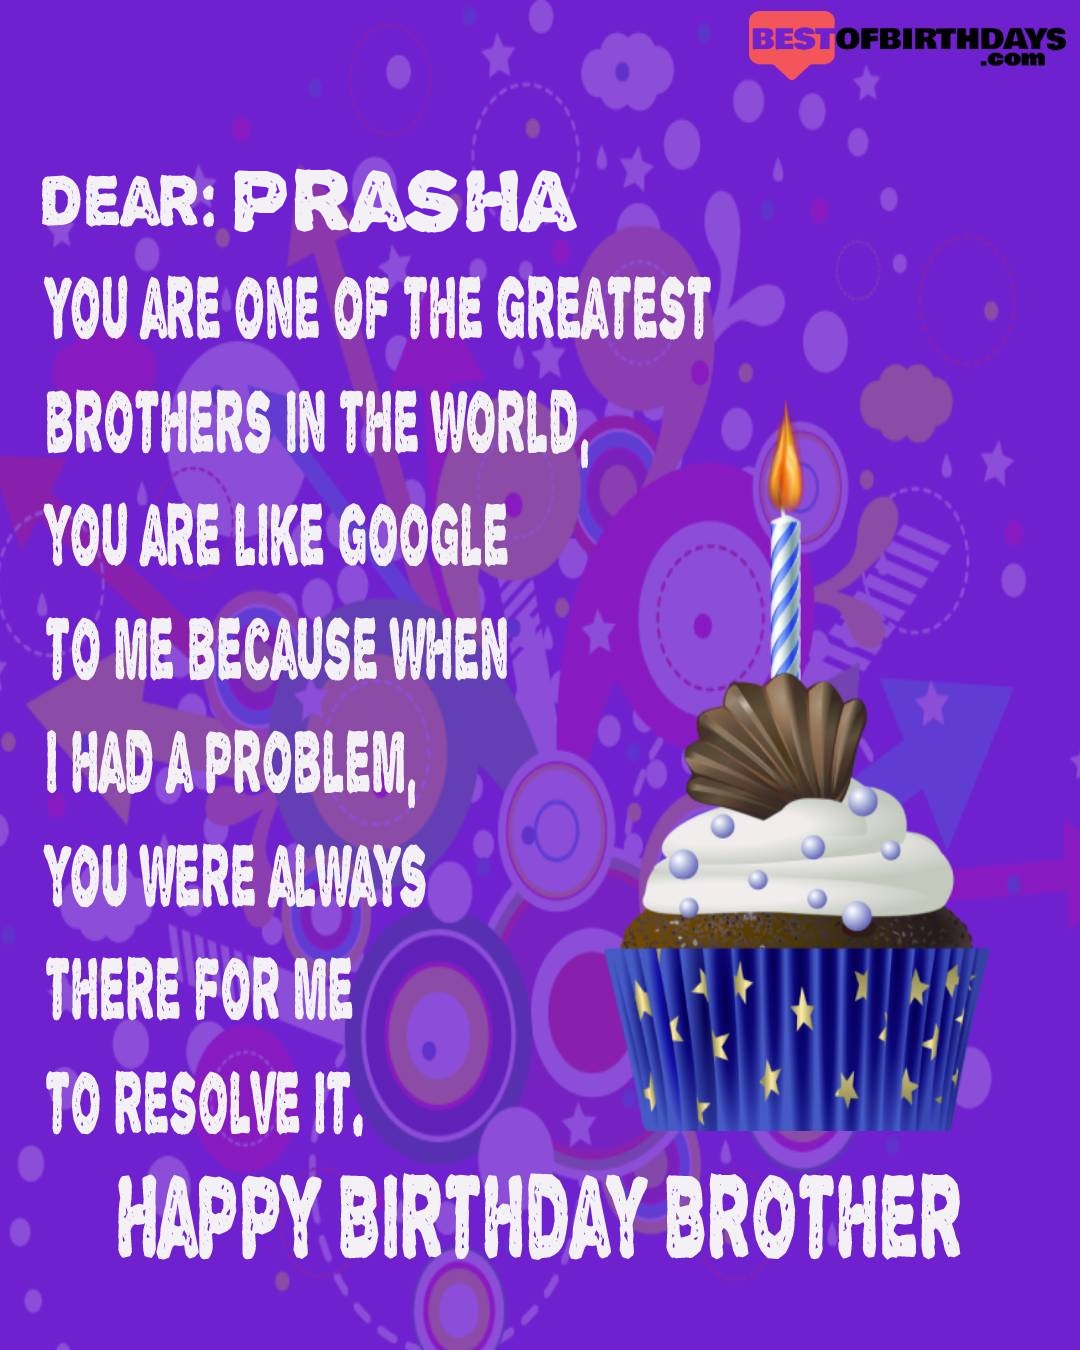 Happy birthday prasha bhai brother bro